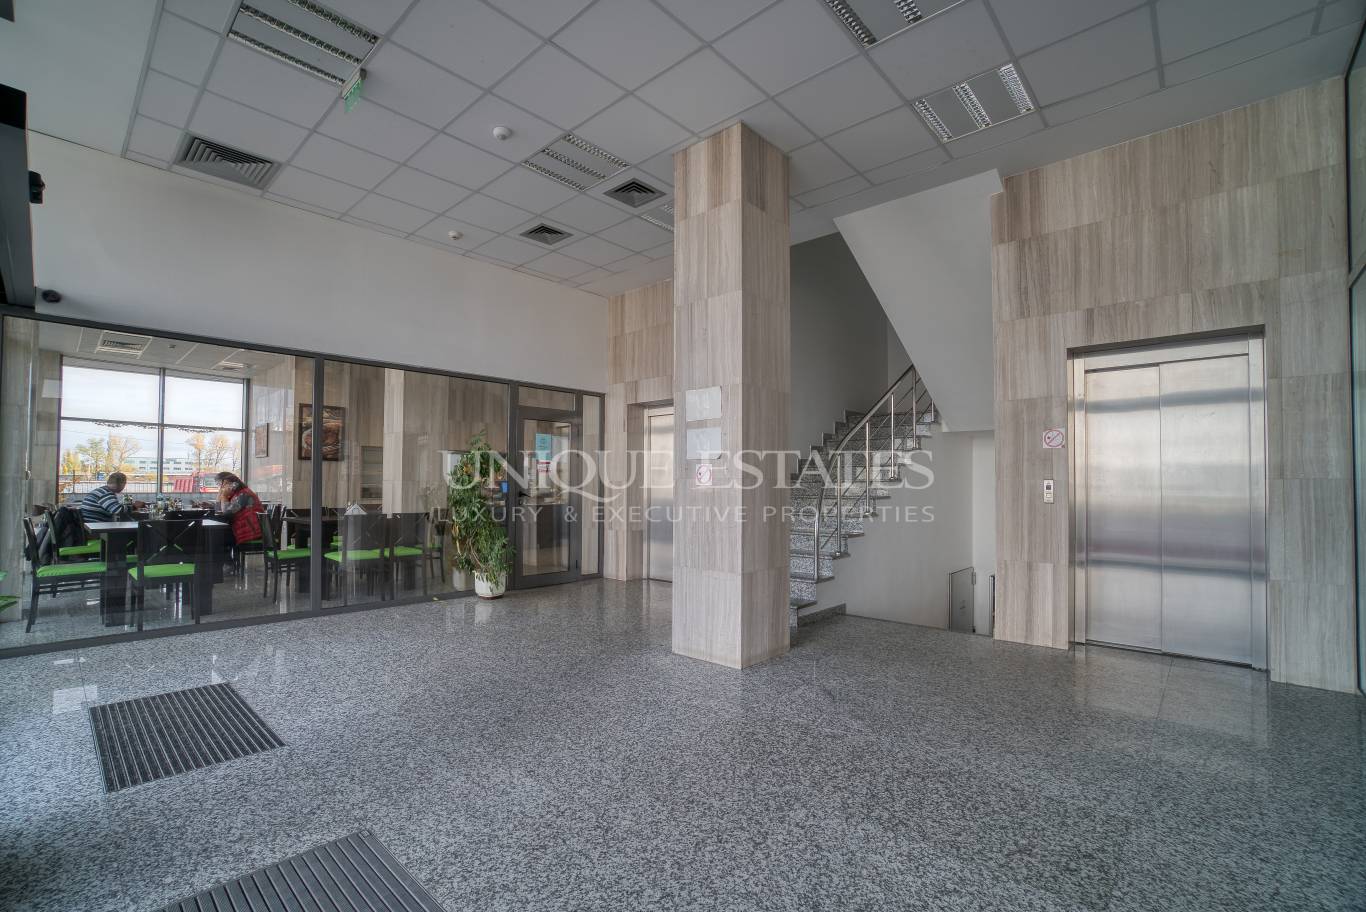 Офис сграда / Сграда за продажба в София, СПЗ Слатина - код на имота: K12214 - image 2